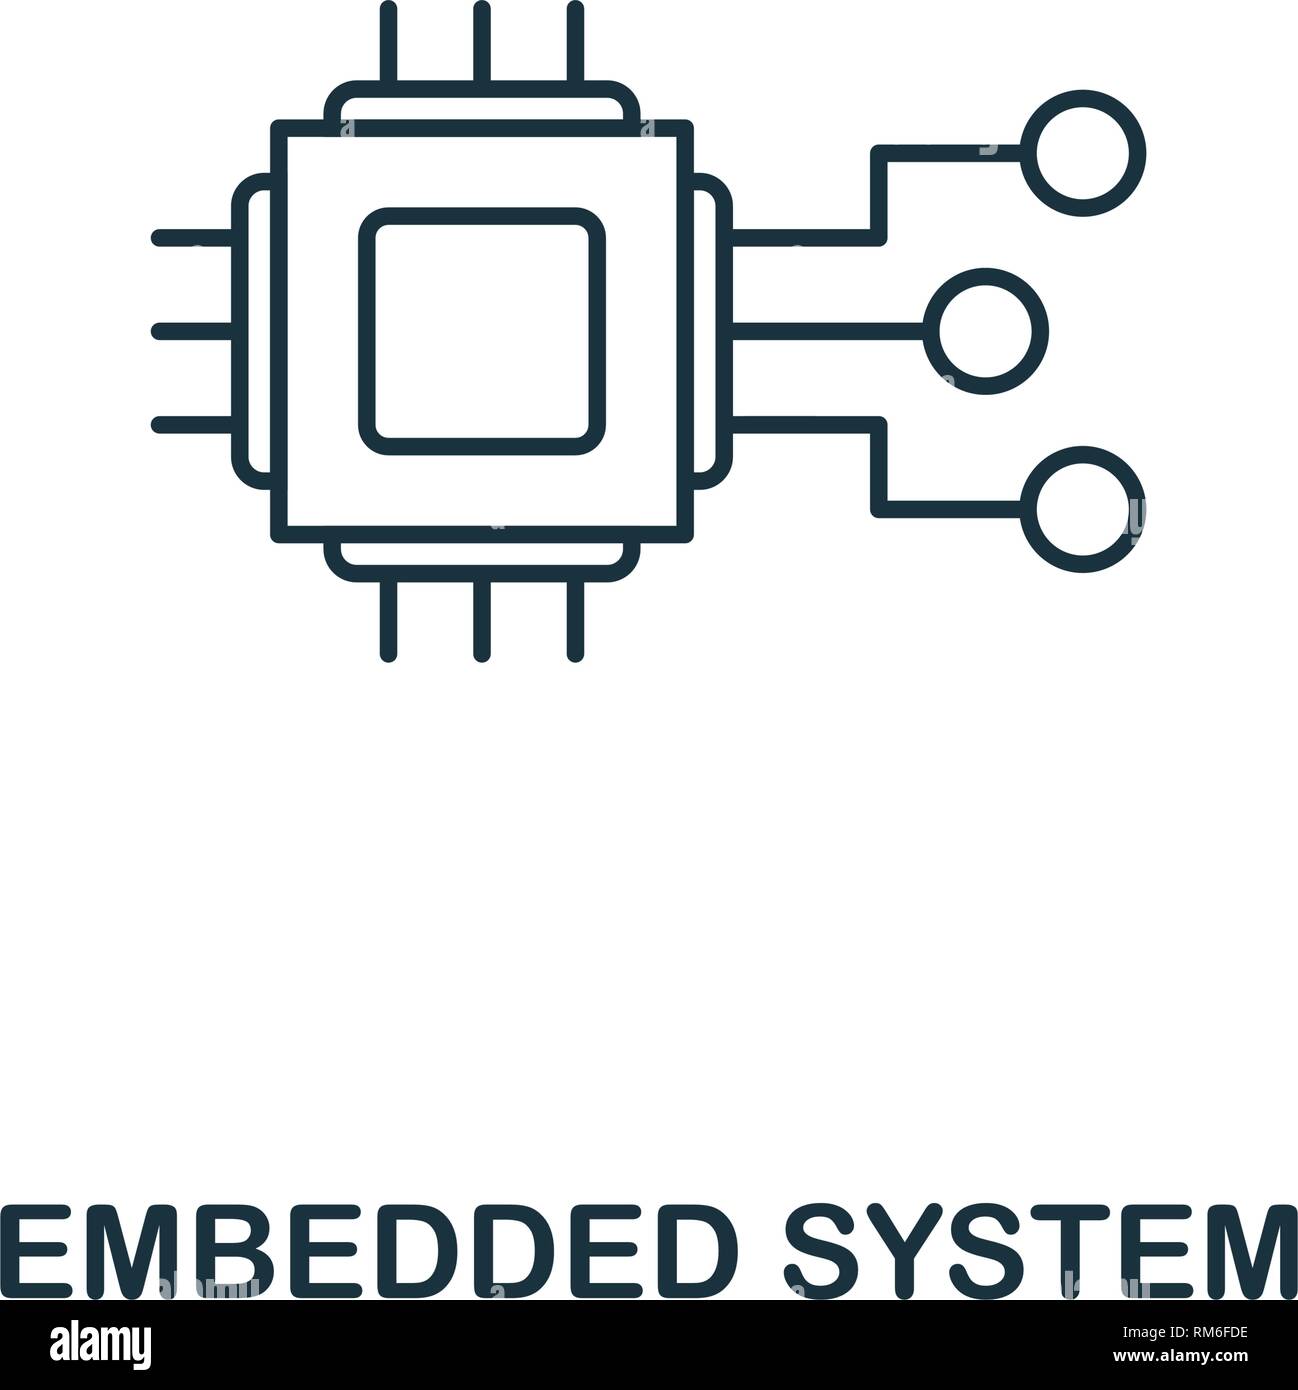 Details 109+ embedded systems logo best - camera.edu.vn